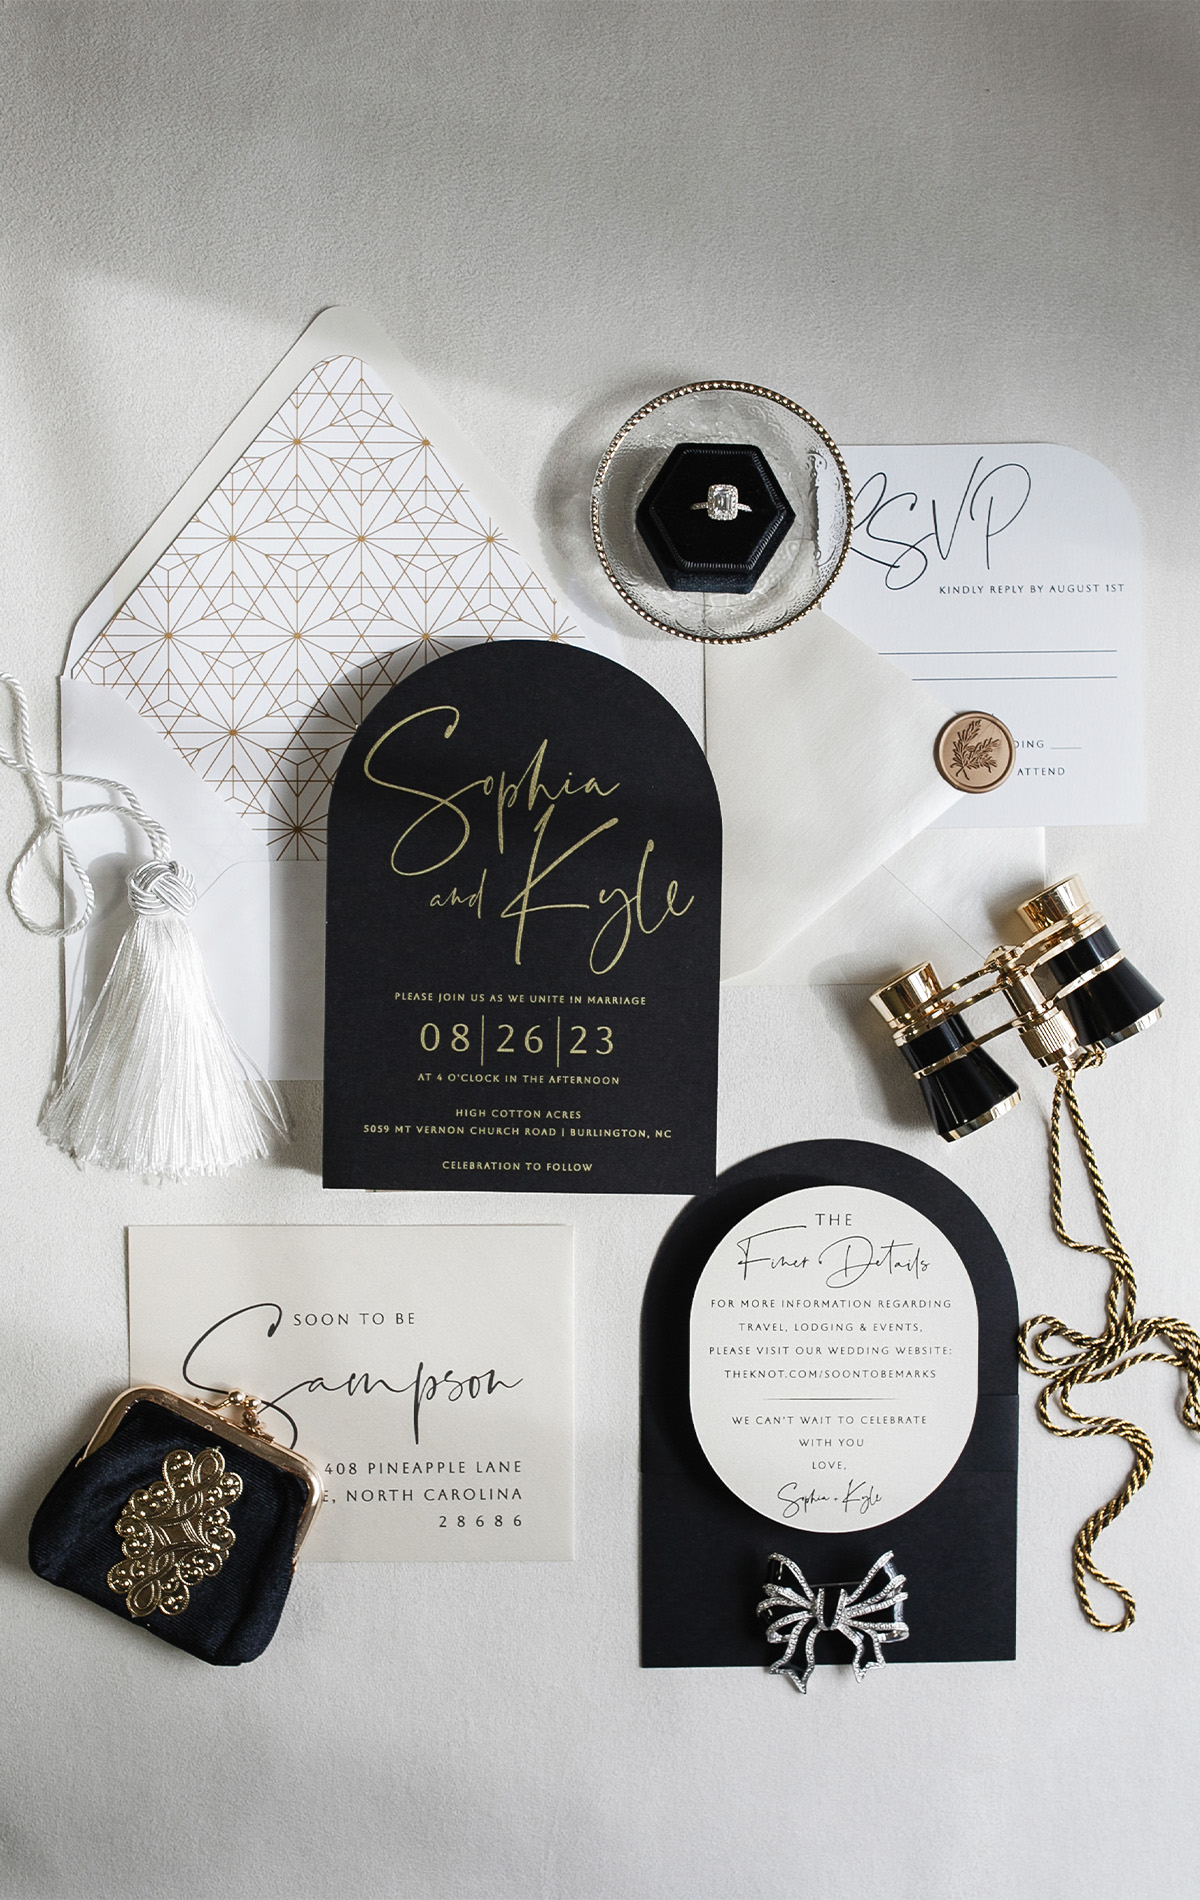 Alexis Scott - Home Website Slider Image - Luxury monochrome and gold wedding invitation suite